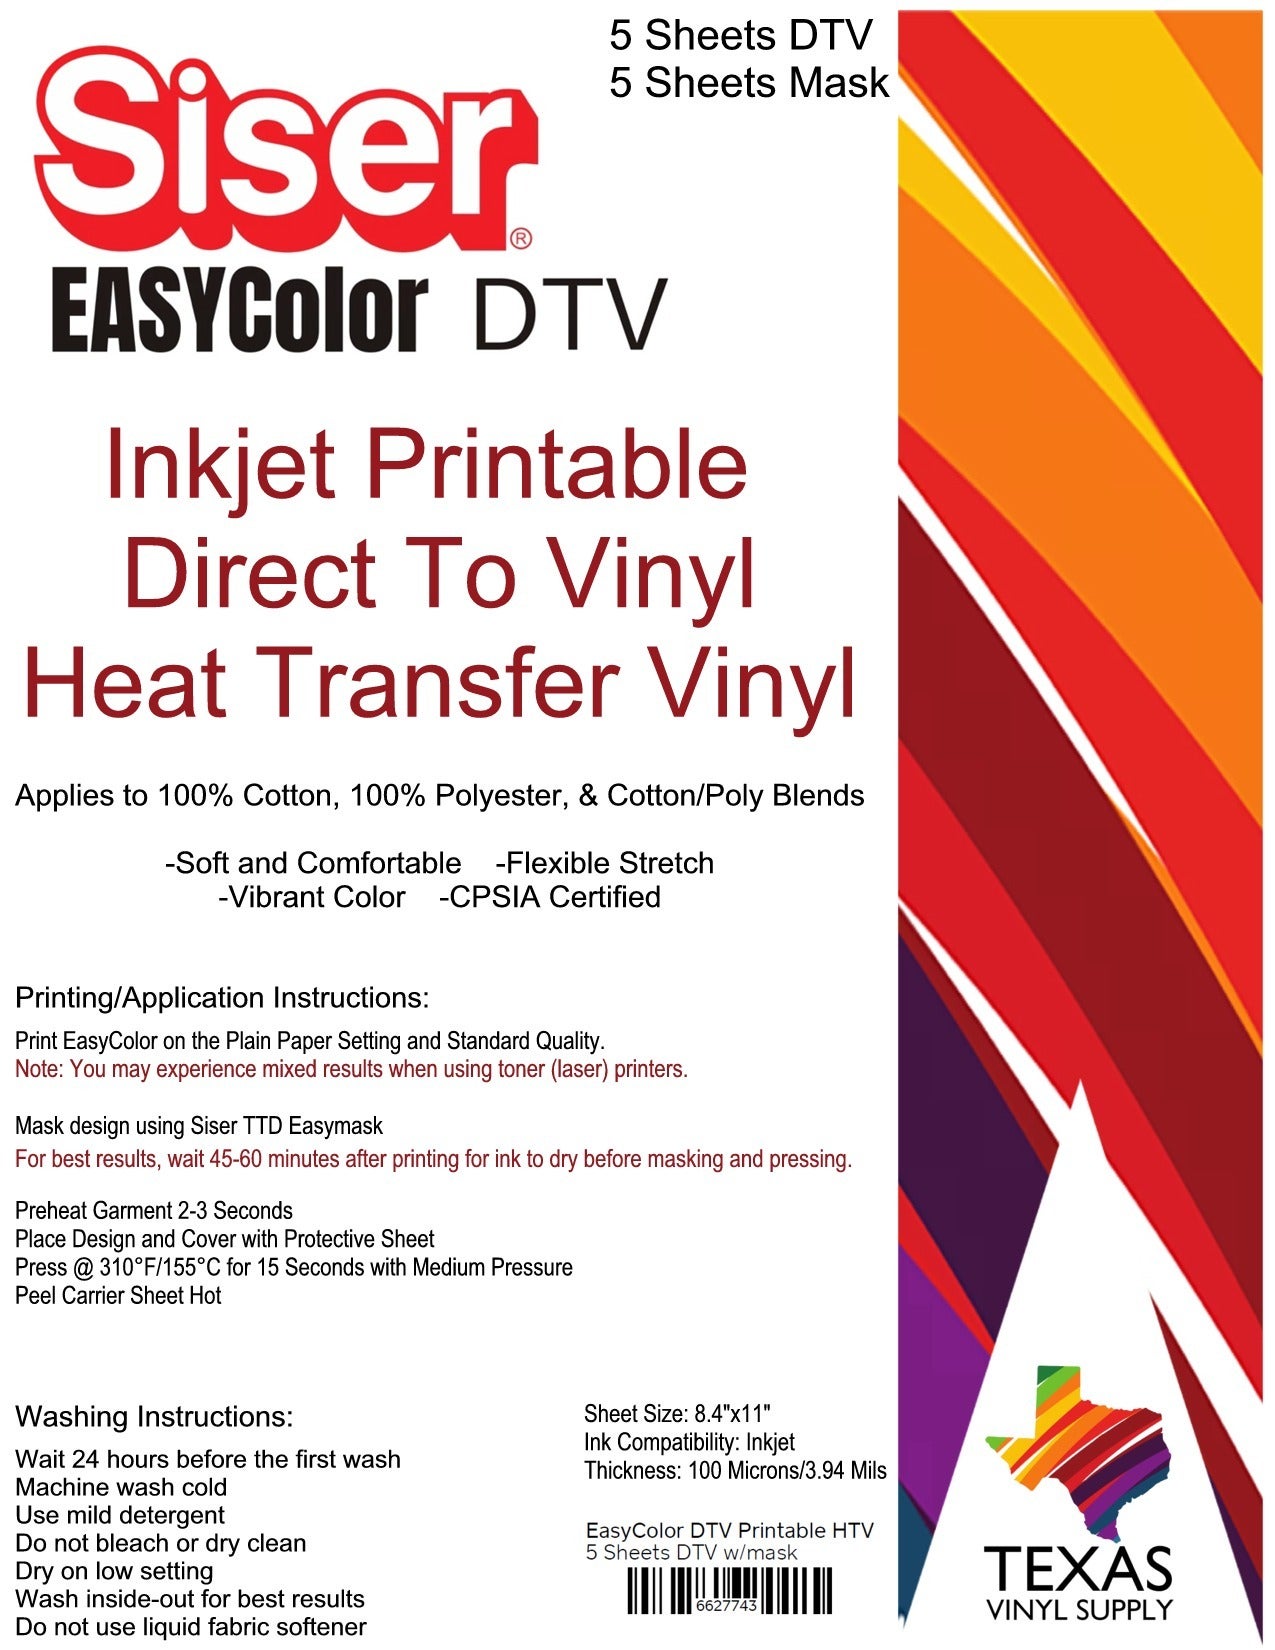 EasyColor DTV Printable HTV